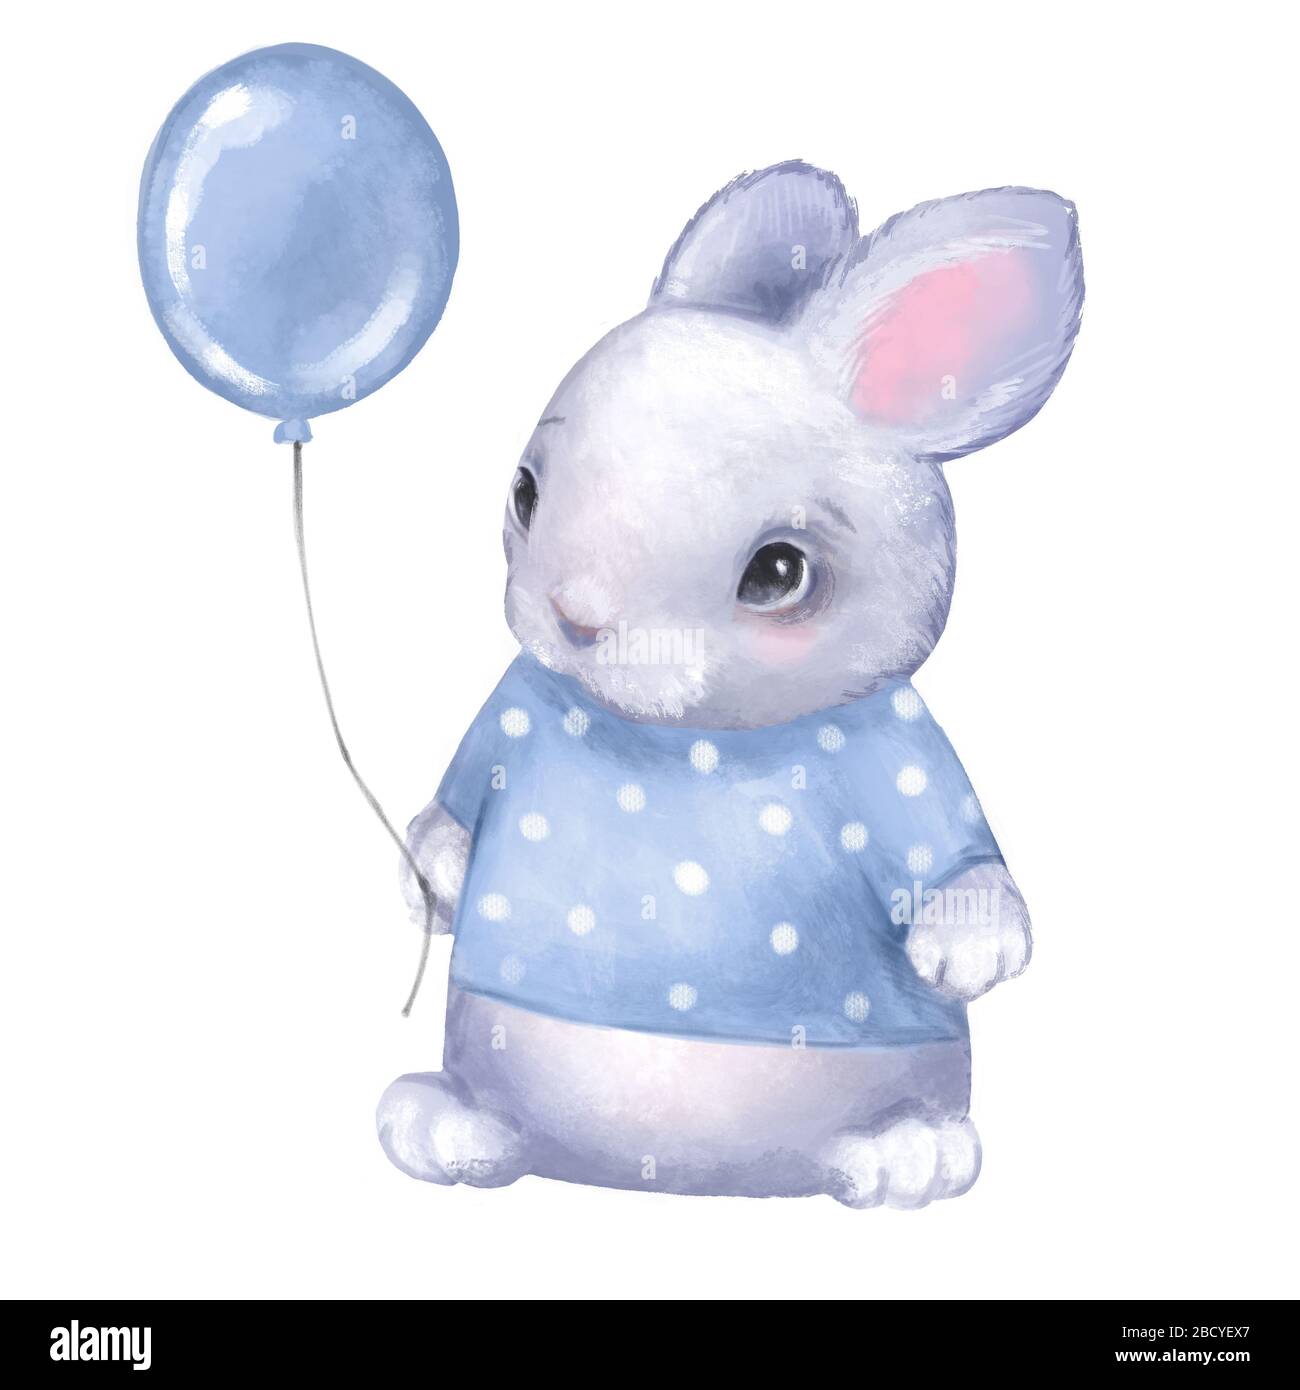 Cute Bunny with Blue Balloon Stock Photo